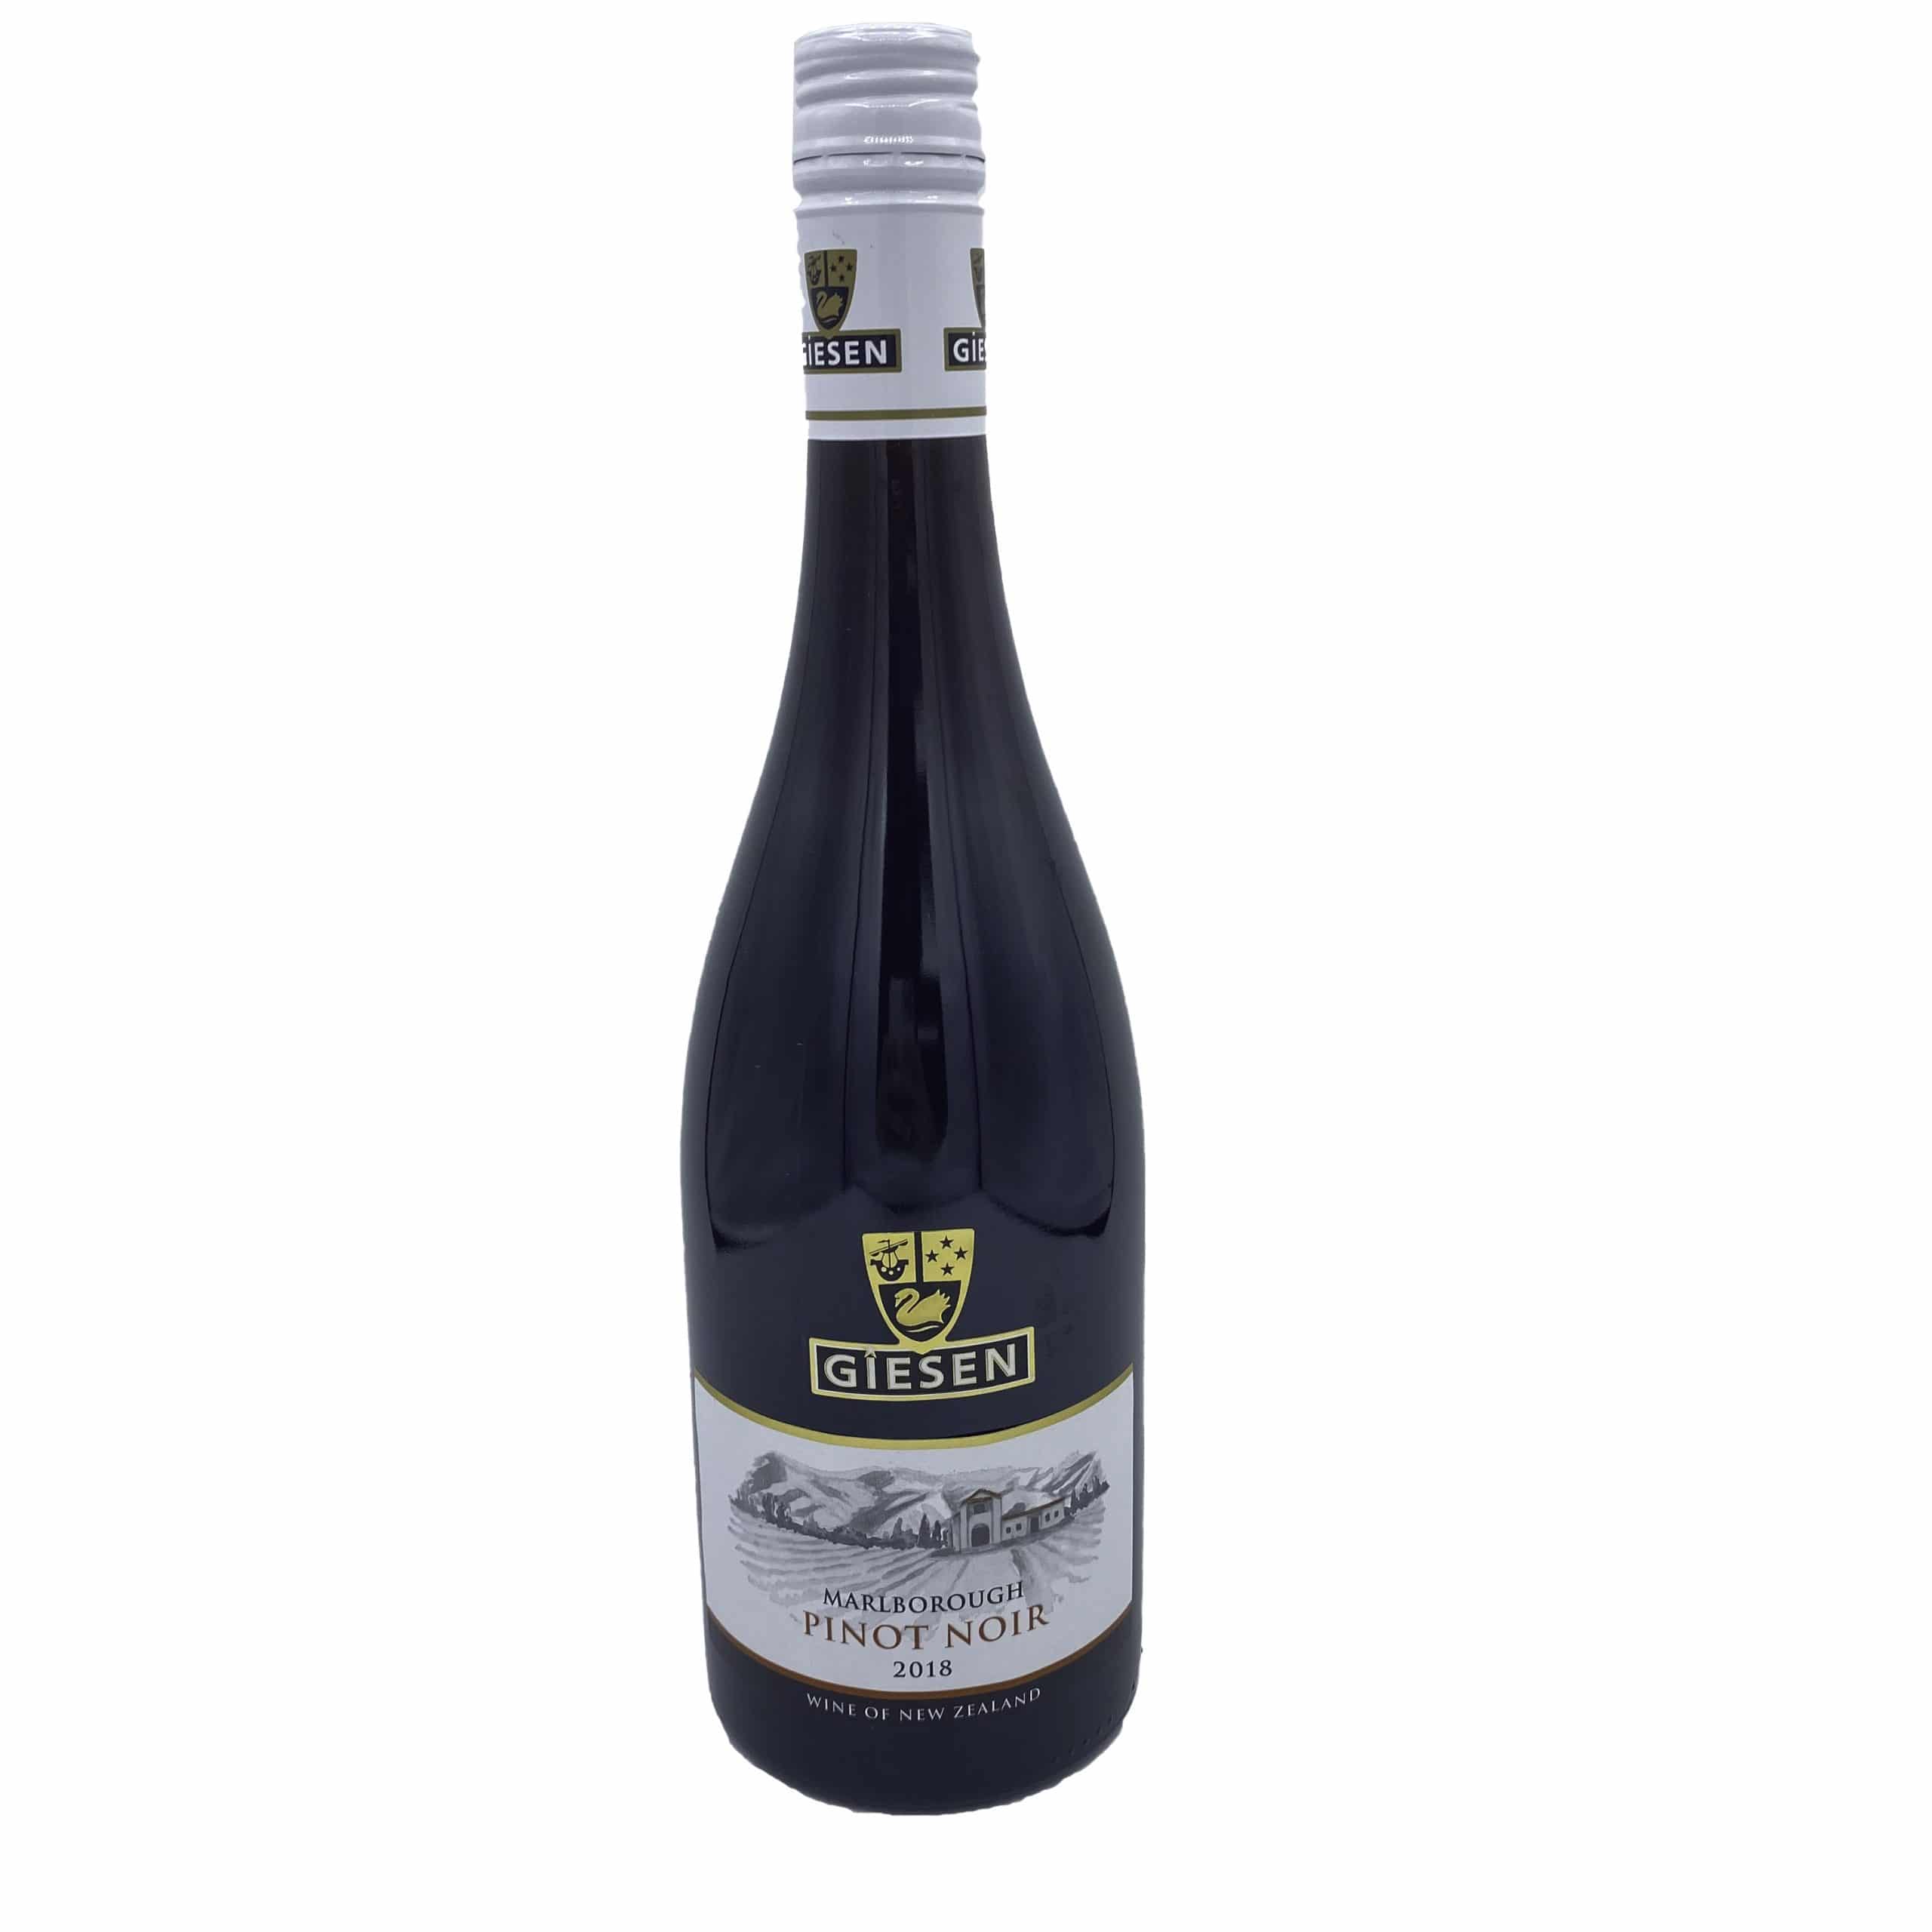 Giesen Marlborough Pinot Noir - Barbank